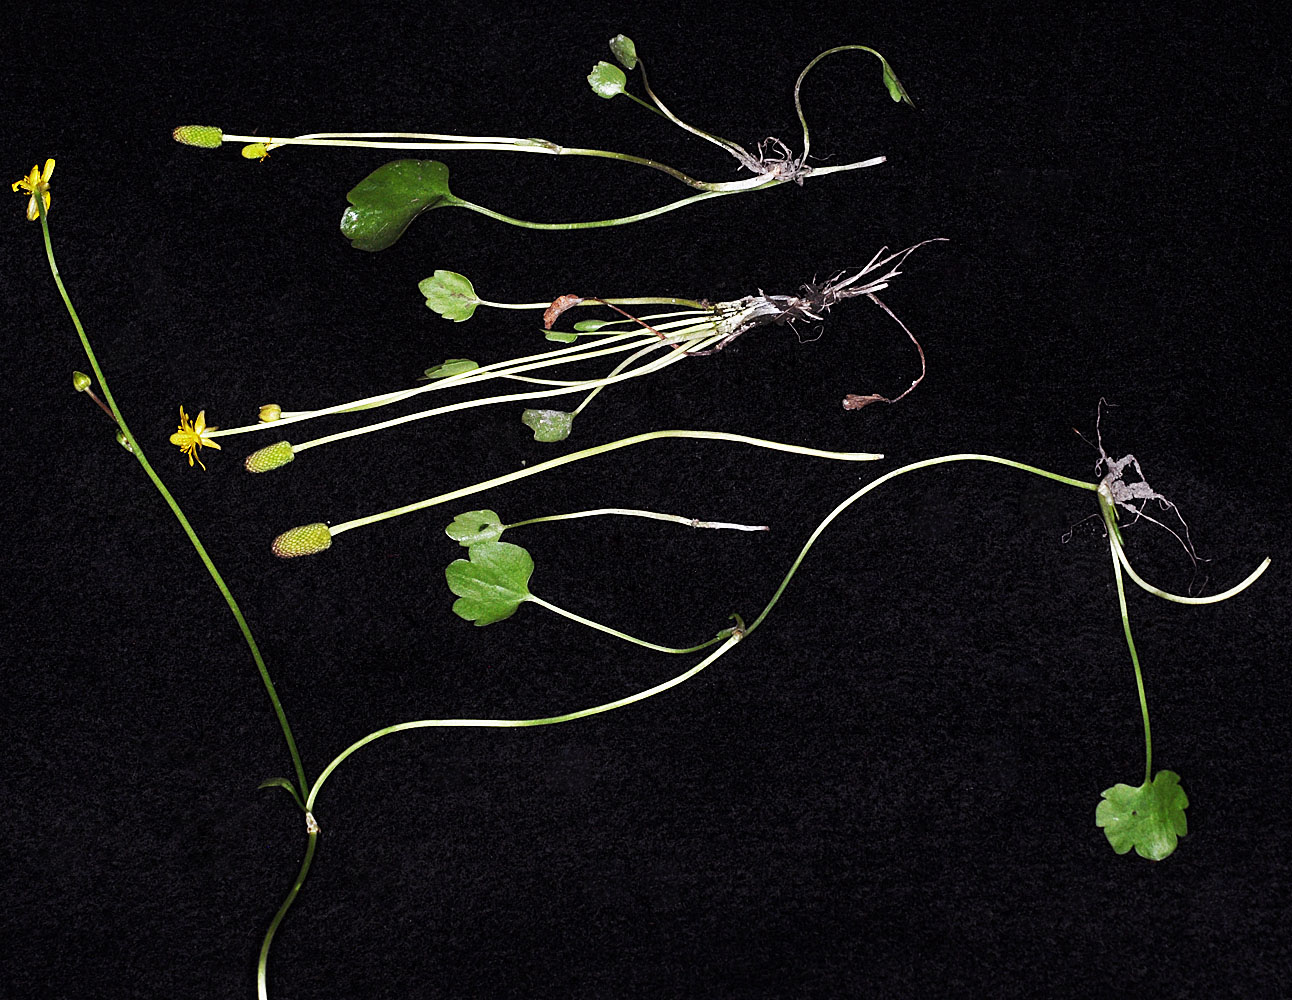 Flora of Eastern Washington Image: Ranunculus cymbalaria